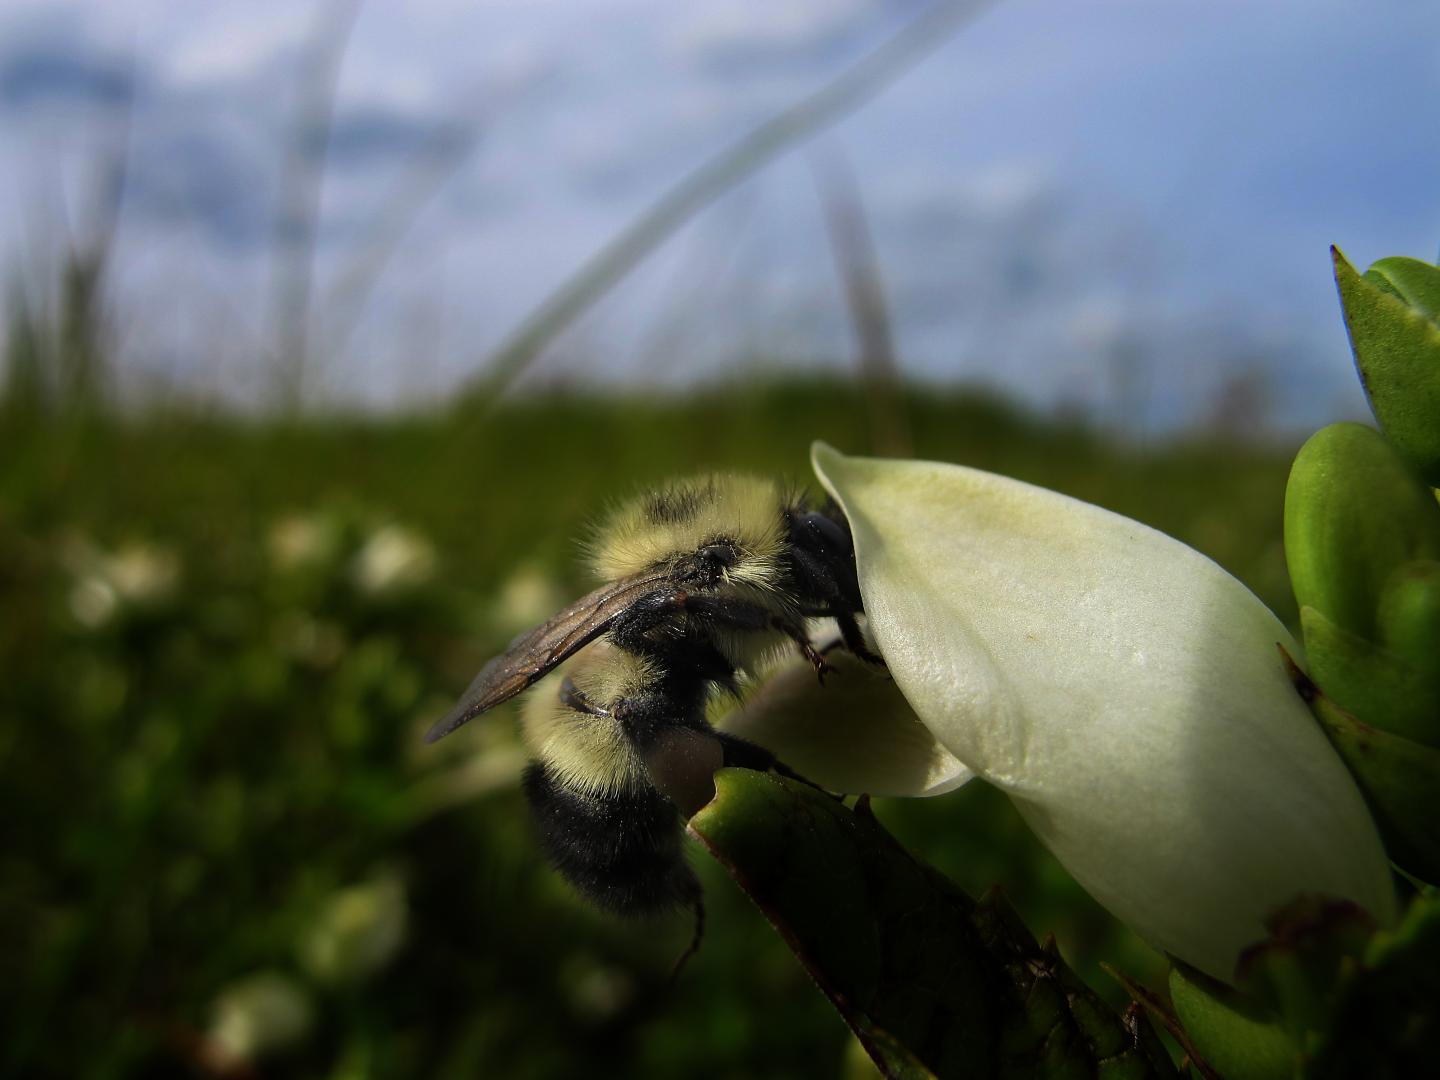 Dartmouth Bee Parasite Pollination Study